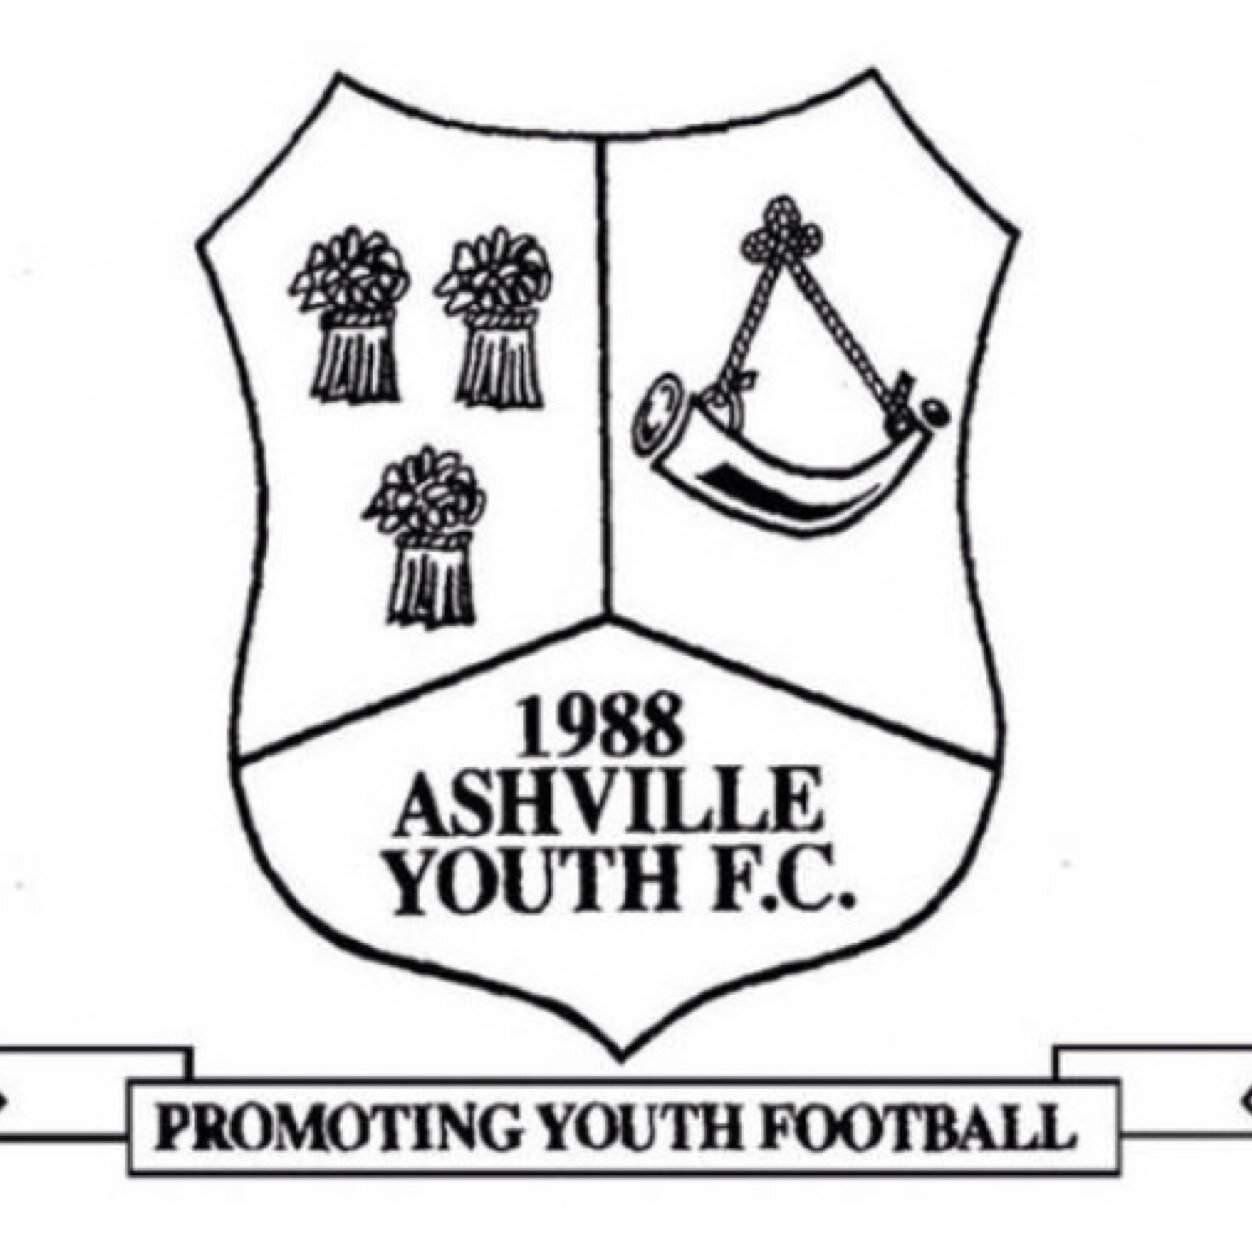 Ashville Youth FC